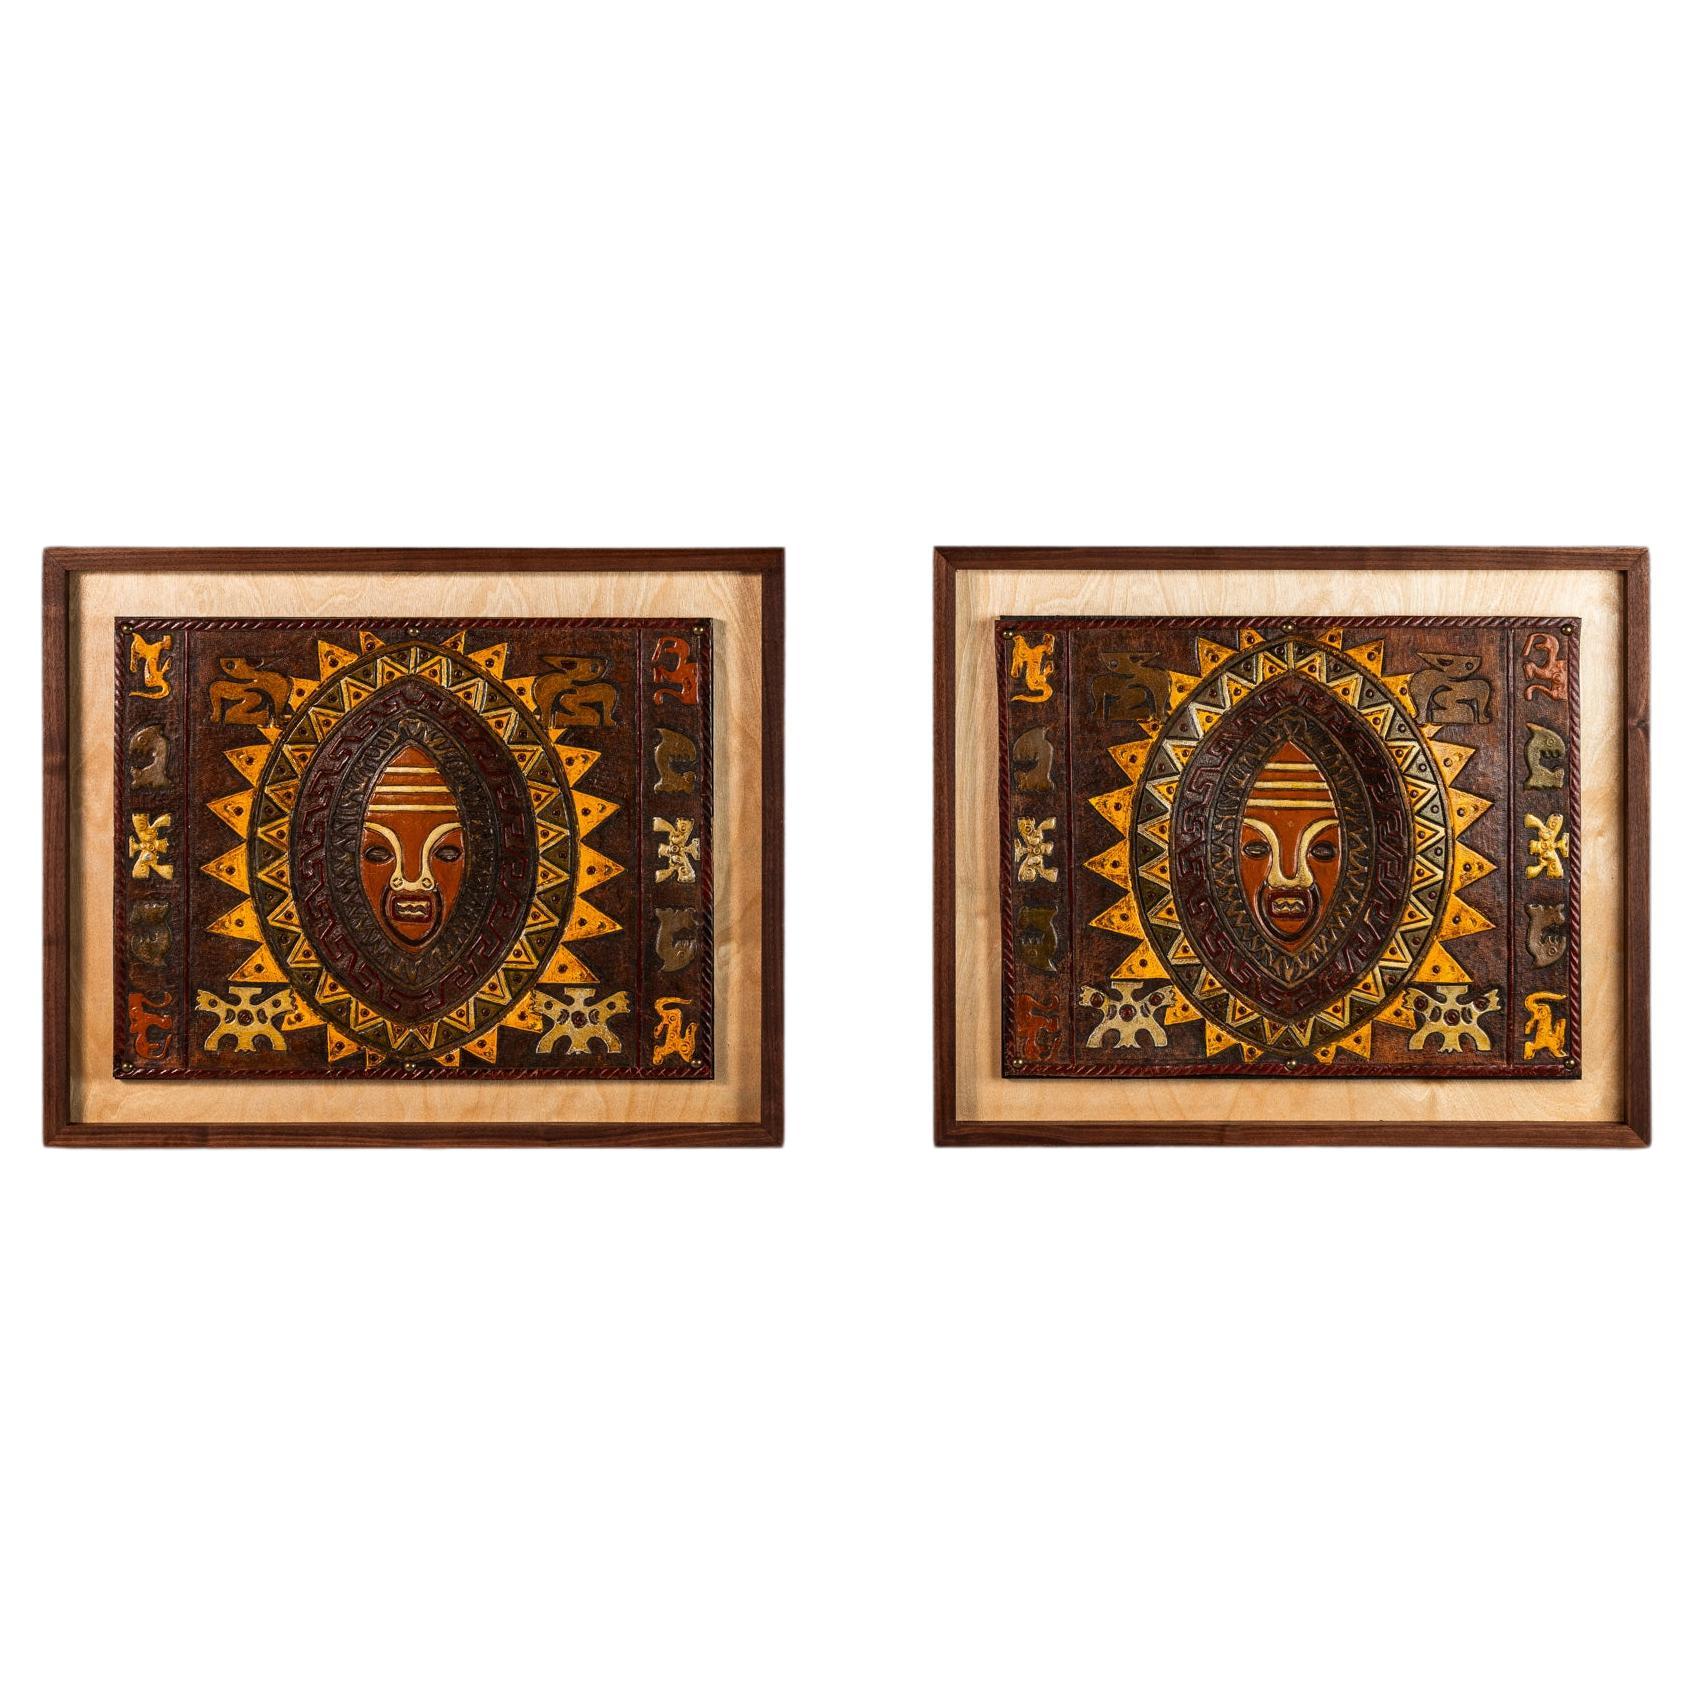 Set of 2 Framed Leather Pre-Columbian Art by Angel Pazmino, Ecuador, c. 1960s